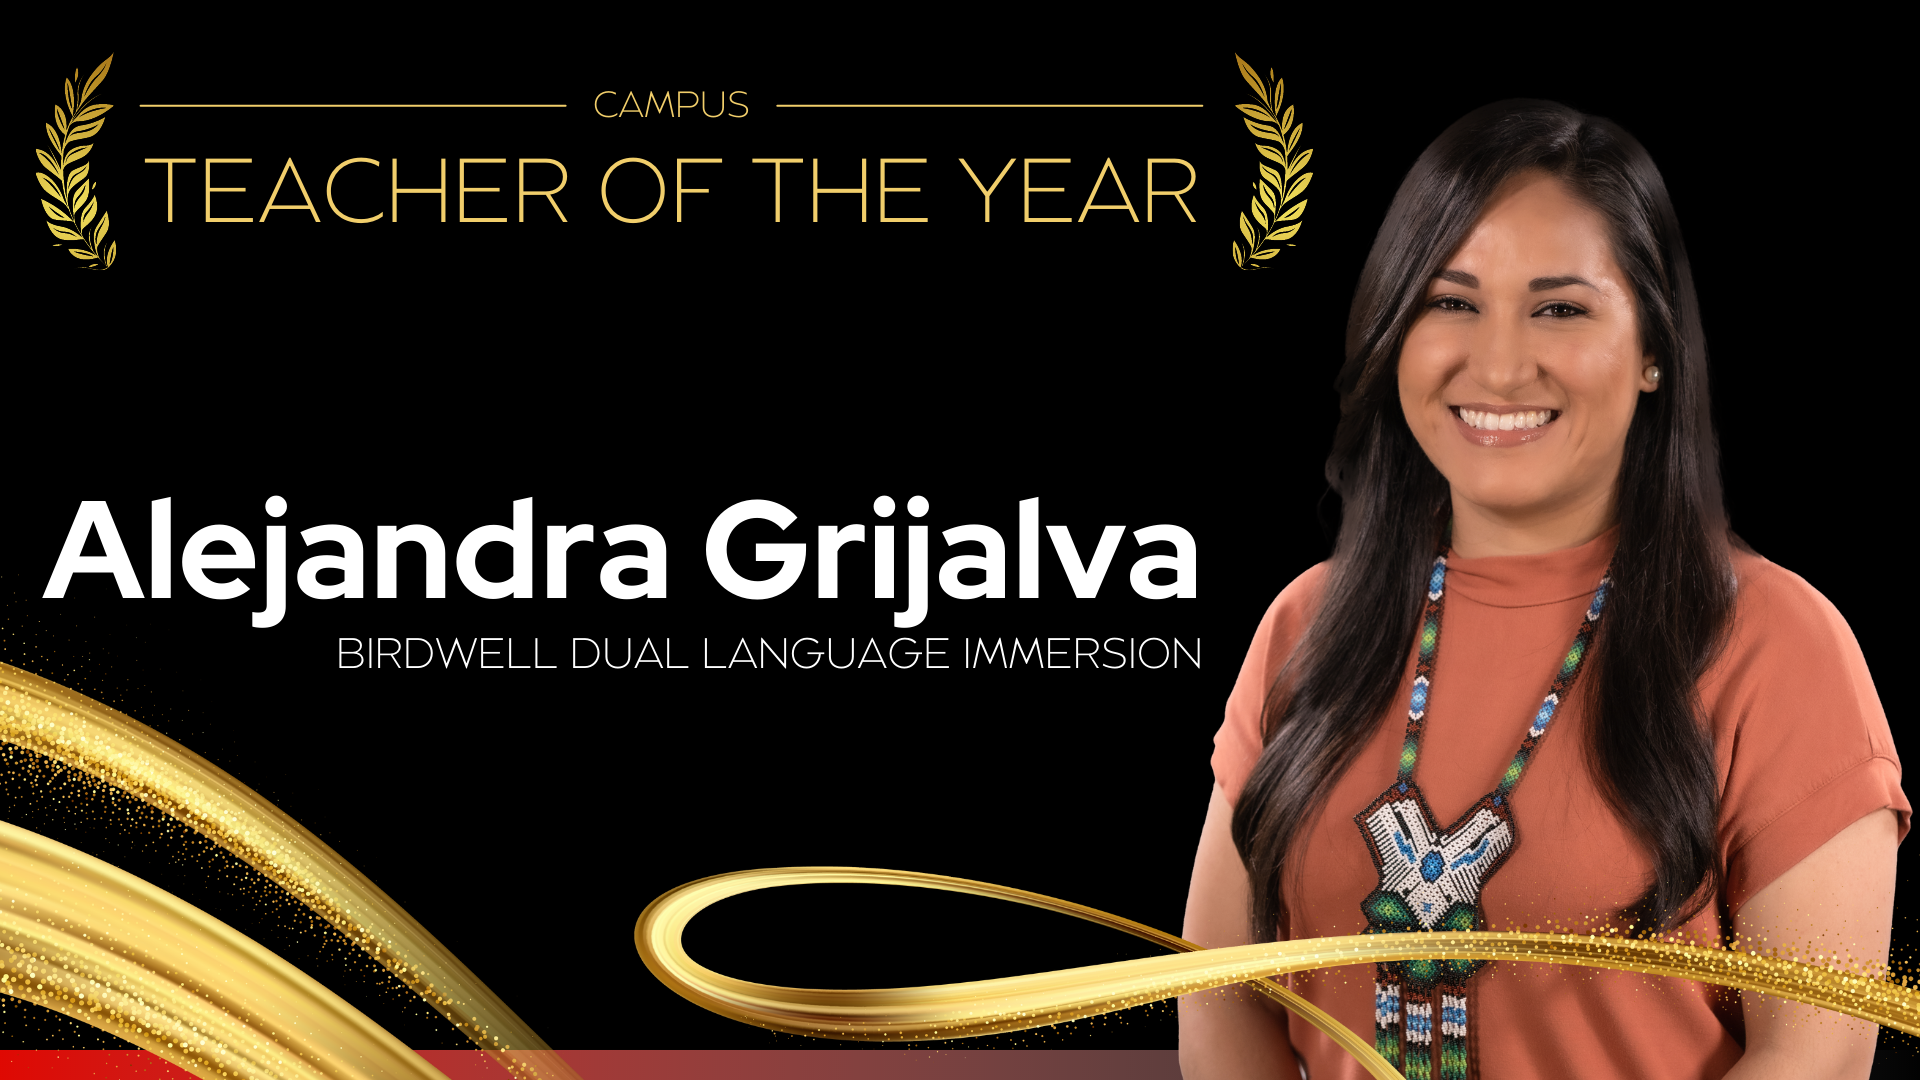 Campus Teacher of the Year Birdwell Dual Language Immersion School - Alejandra Grijalva 